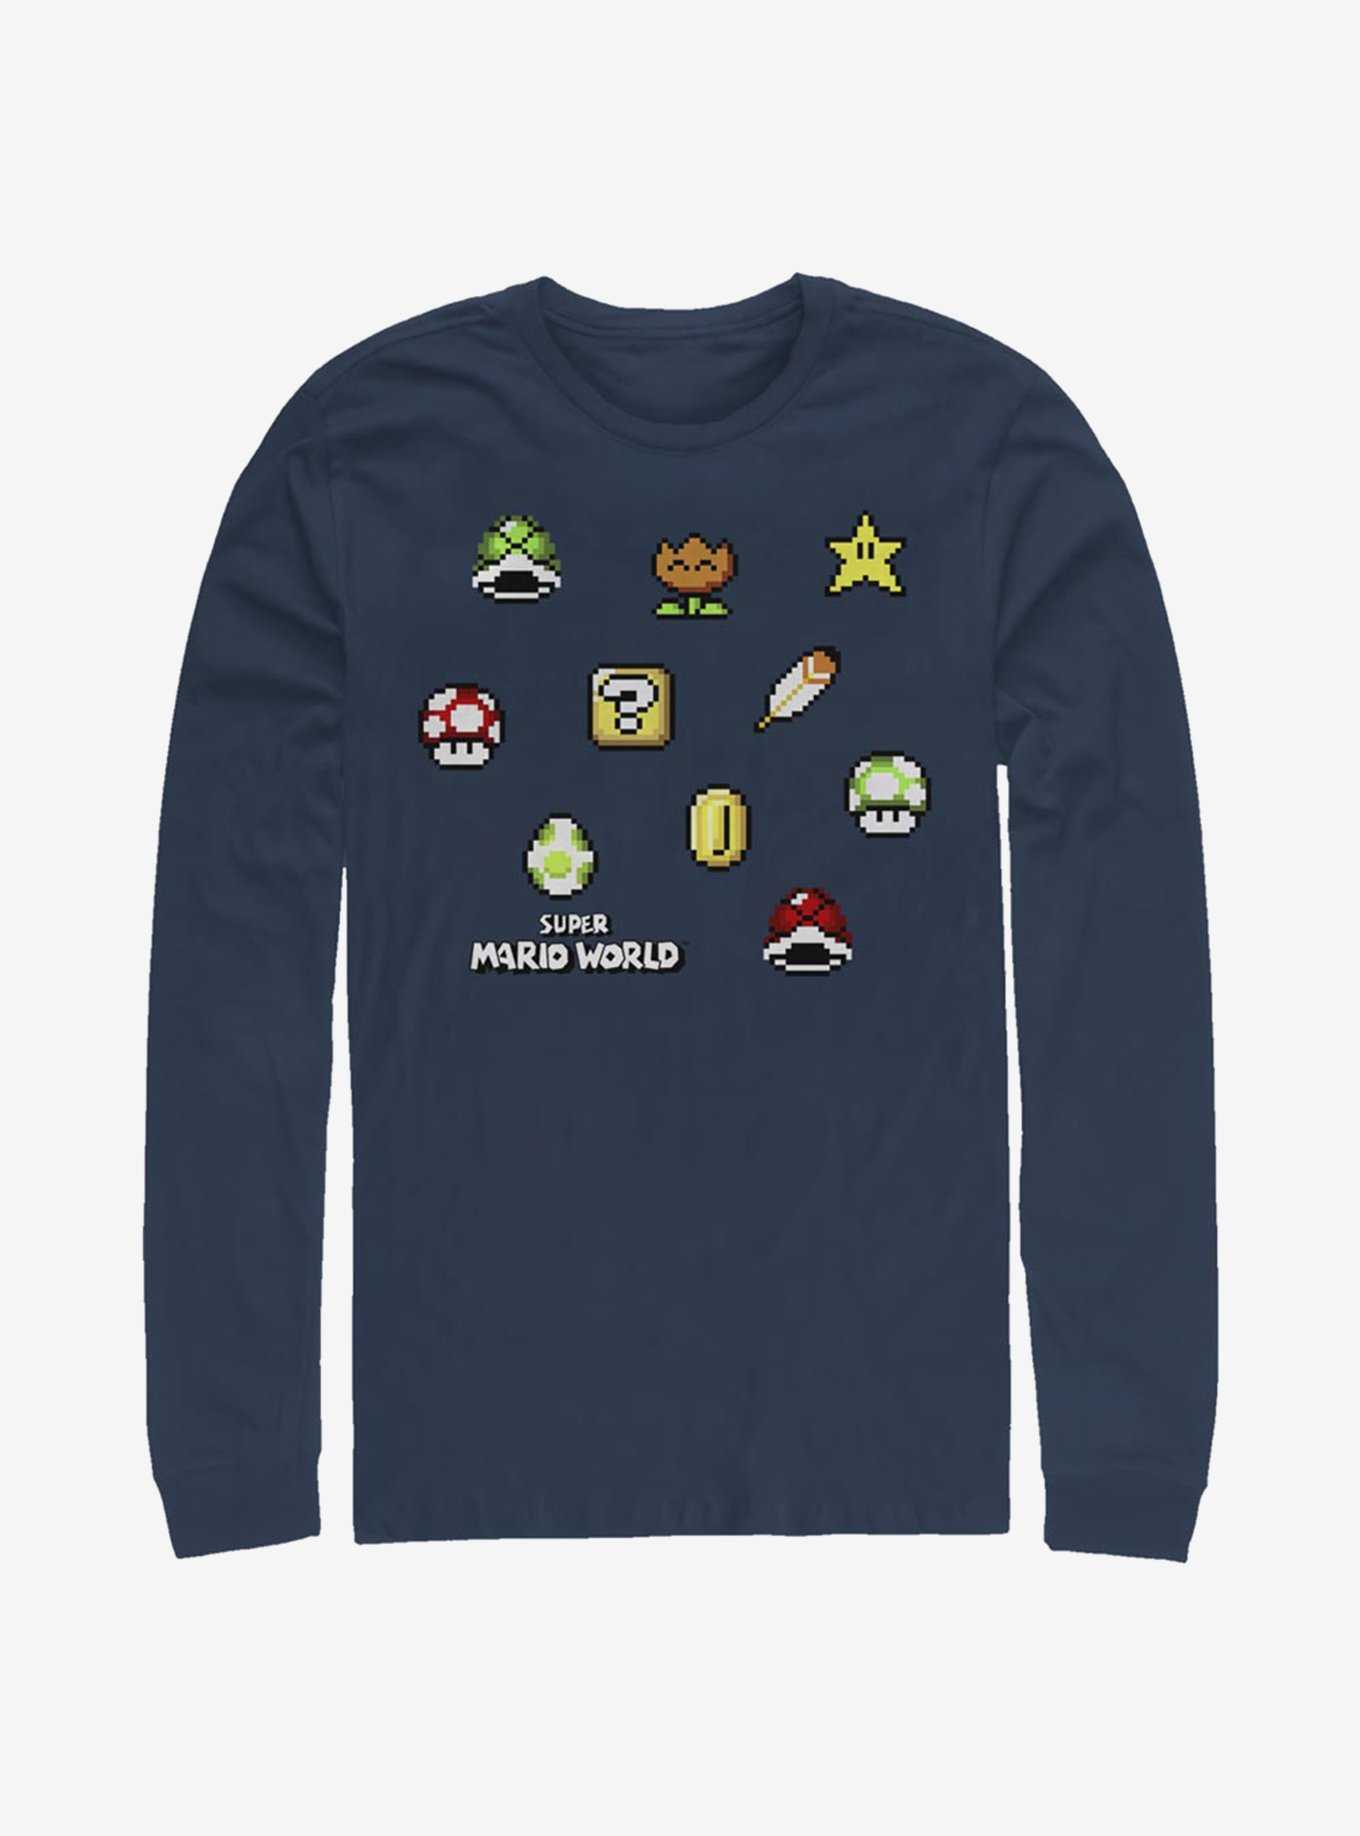 Super Mario Maker Items Scatter Long-Sleeve T-Shirt, , hi-res